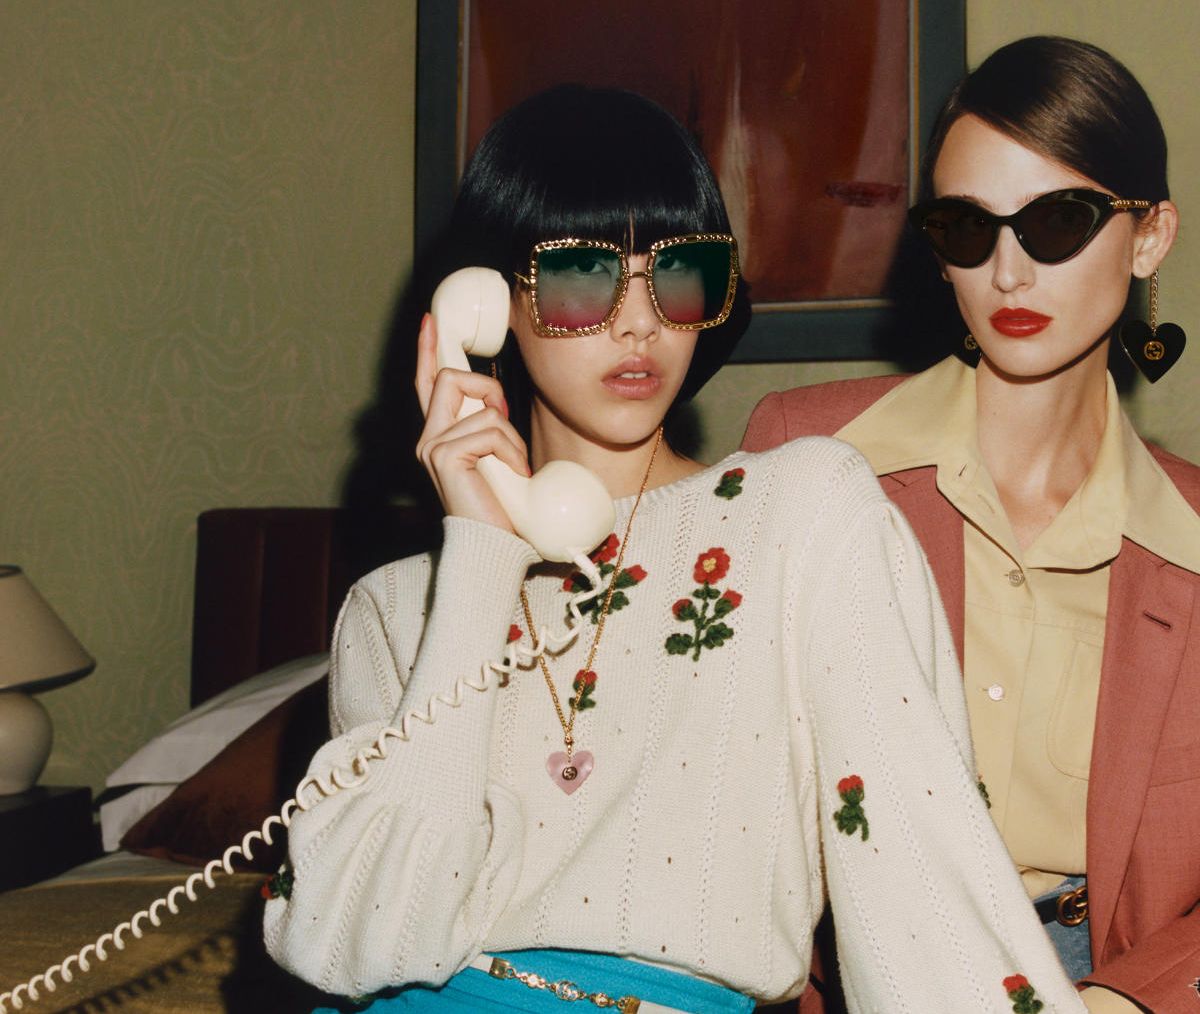 Gucci Presents Its New Fall Winter 2021-22 Eyewear Campaign